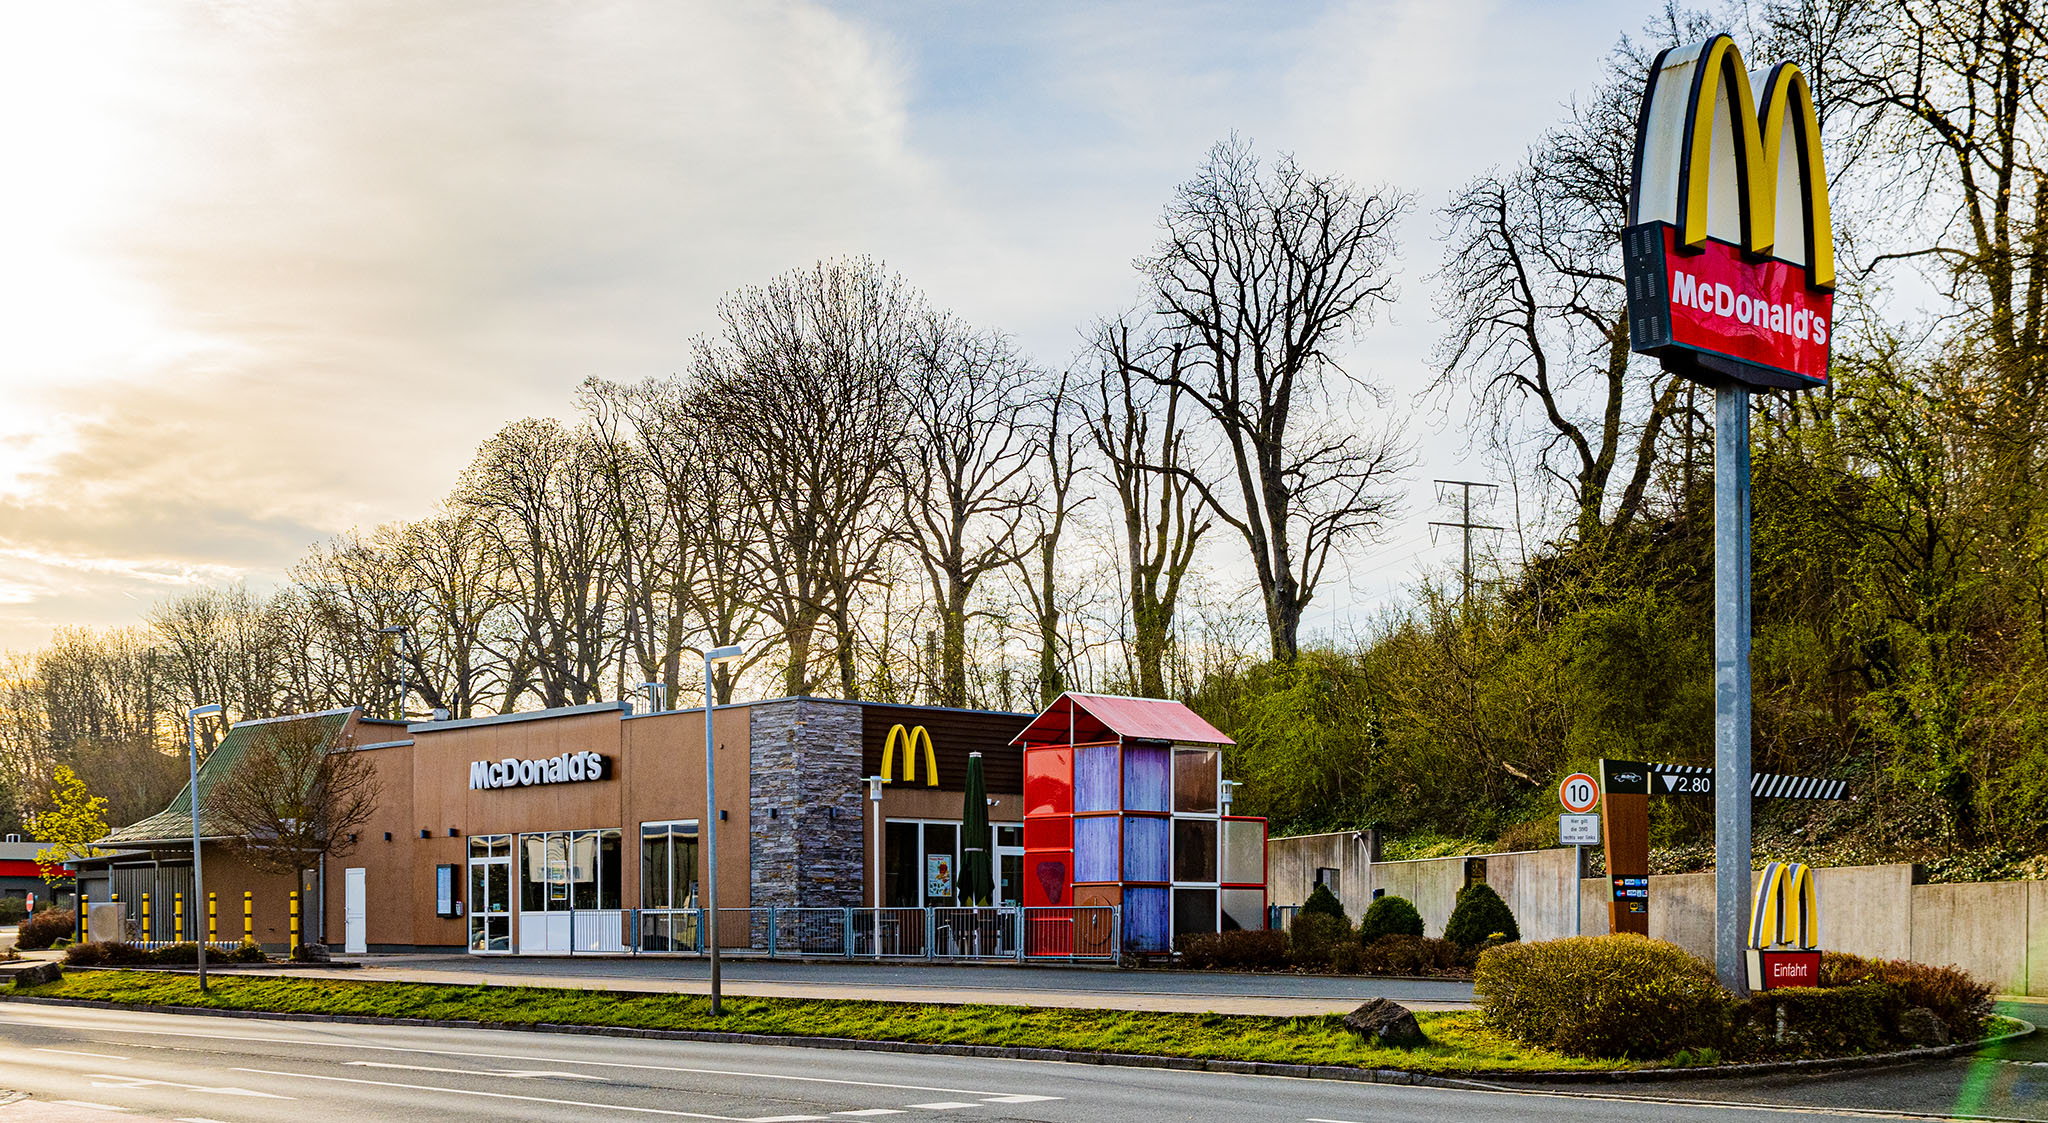 Das McDonald’s-Restaurant in Neustadt an der Aisch